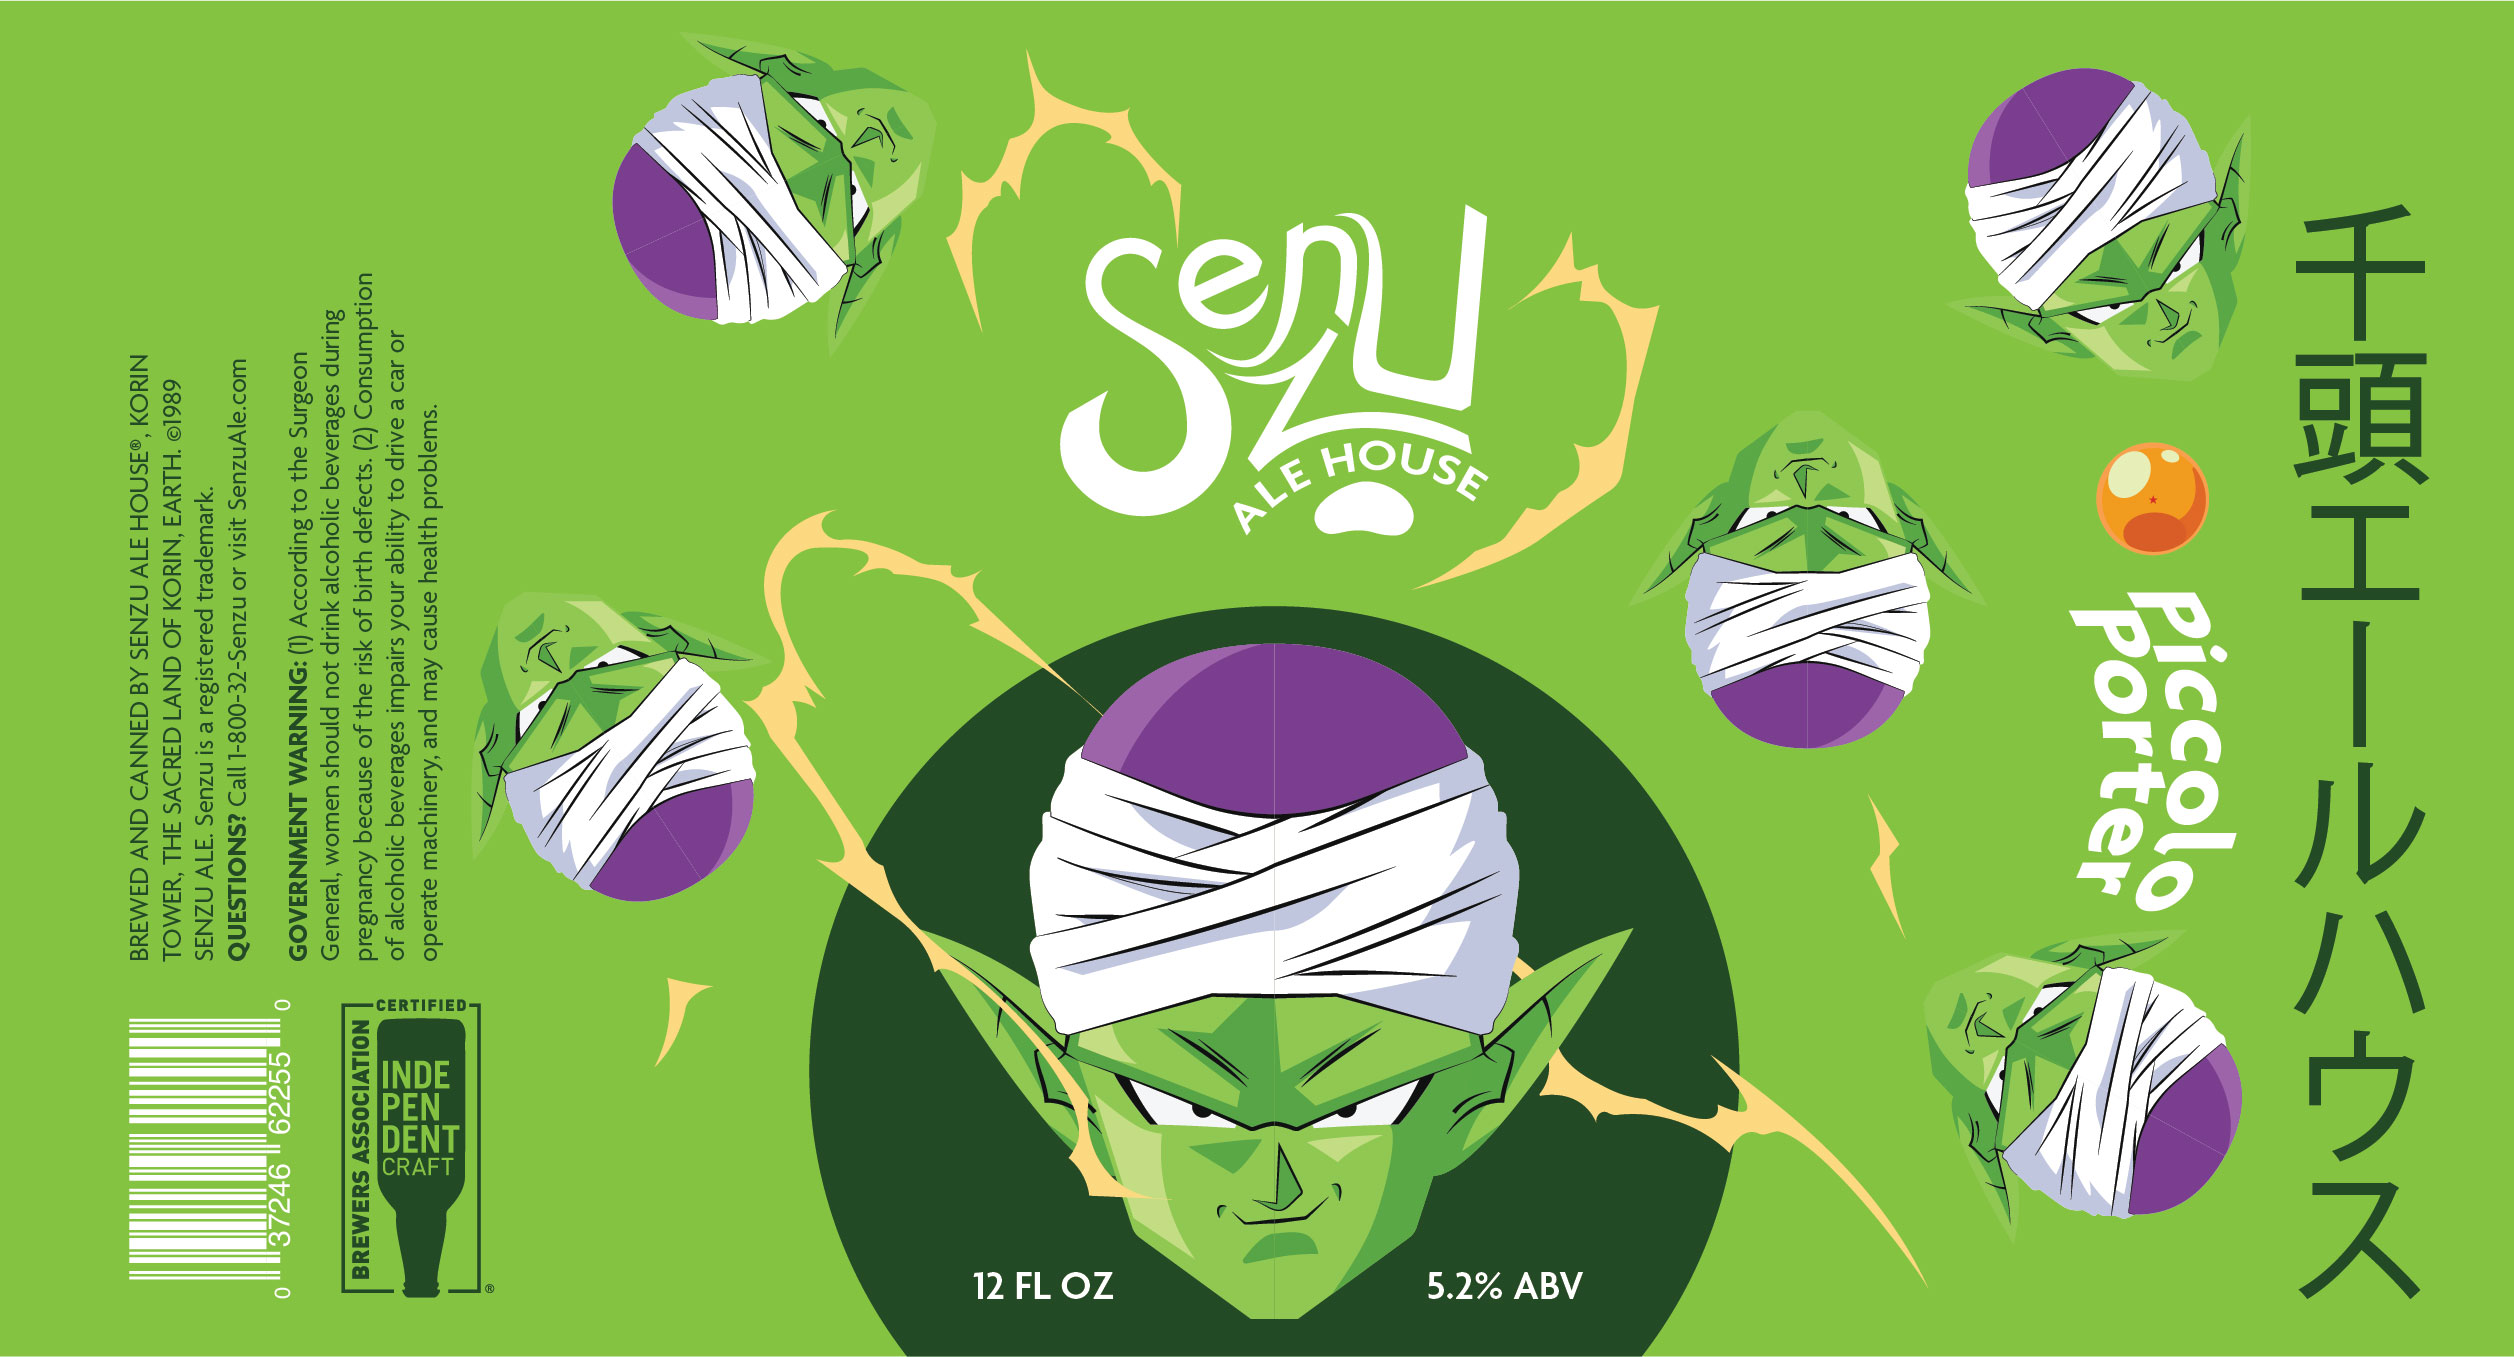 Senzu Ale House beer label iteration